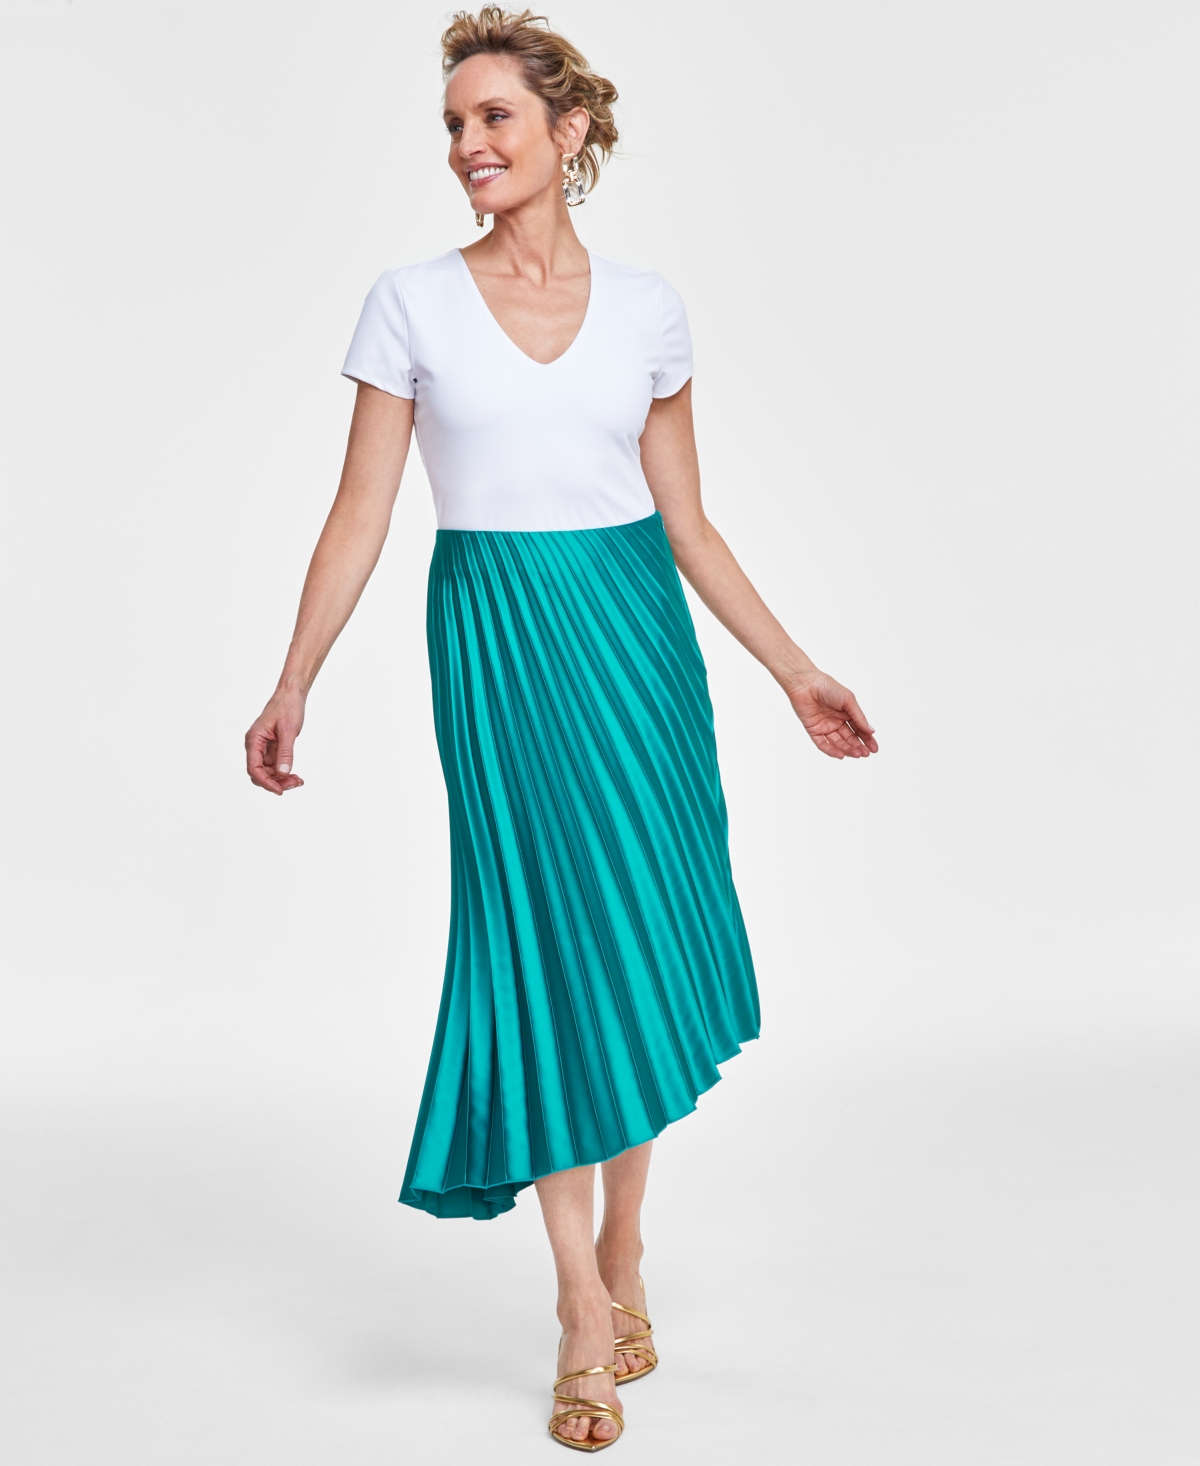 Women's Asymmetric Pleated Skirt, Created for Macy's - Fresco Blue